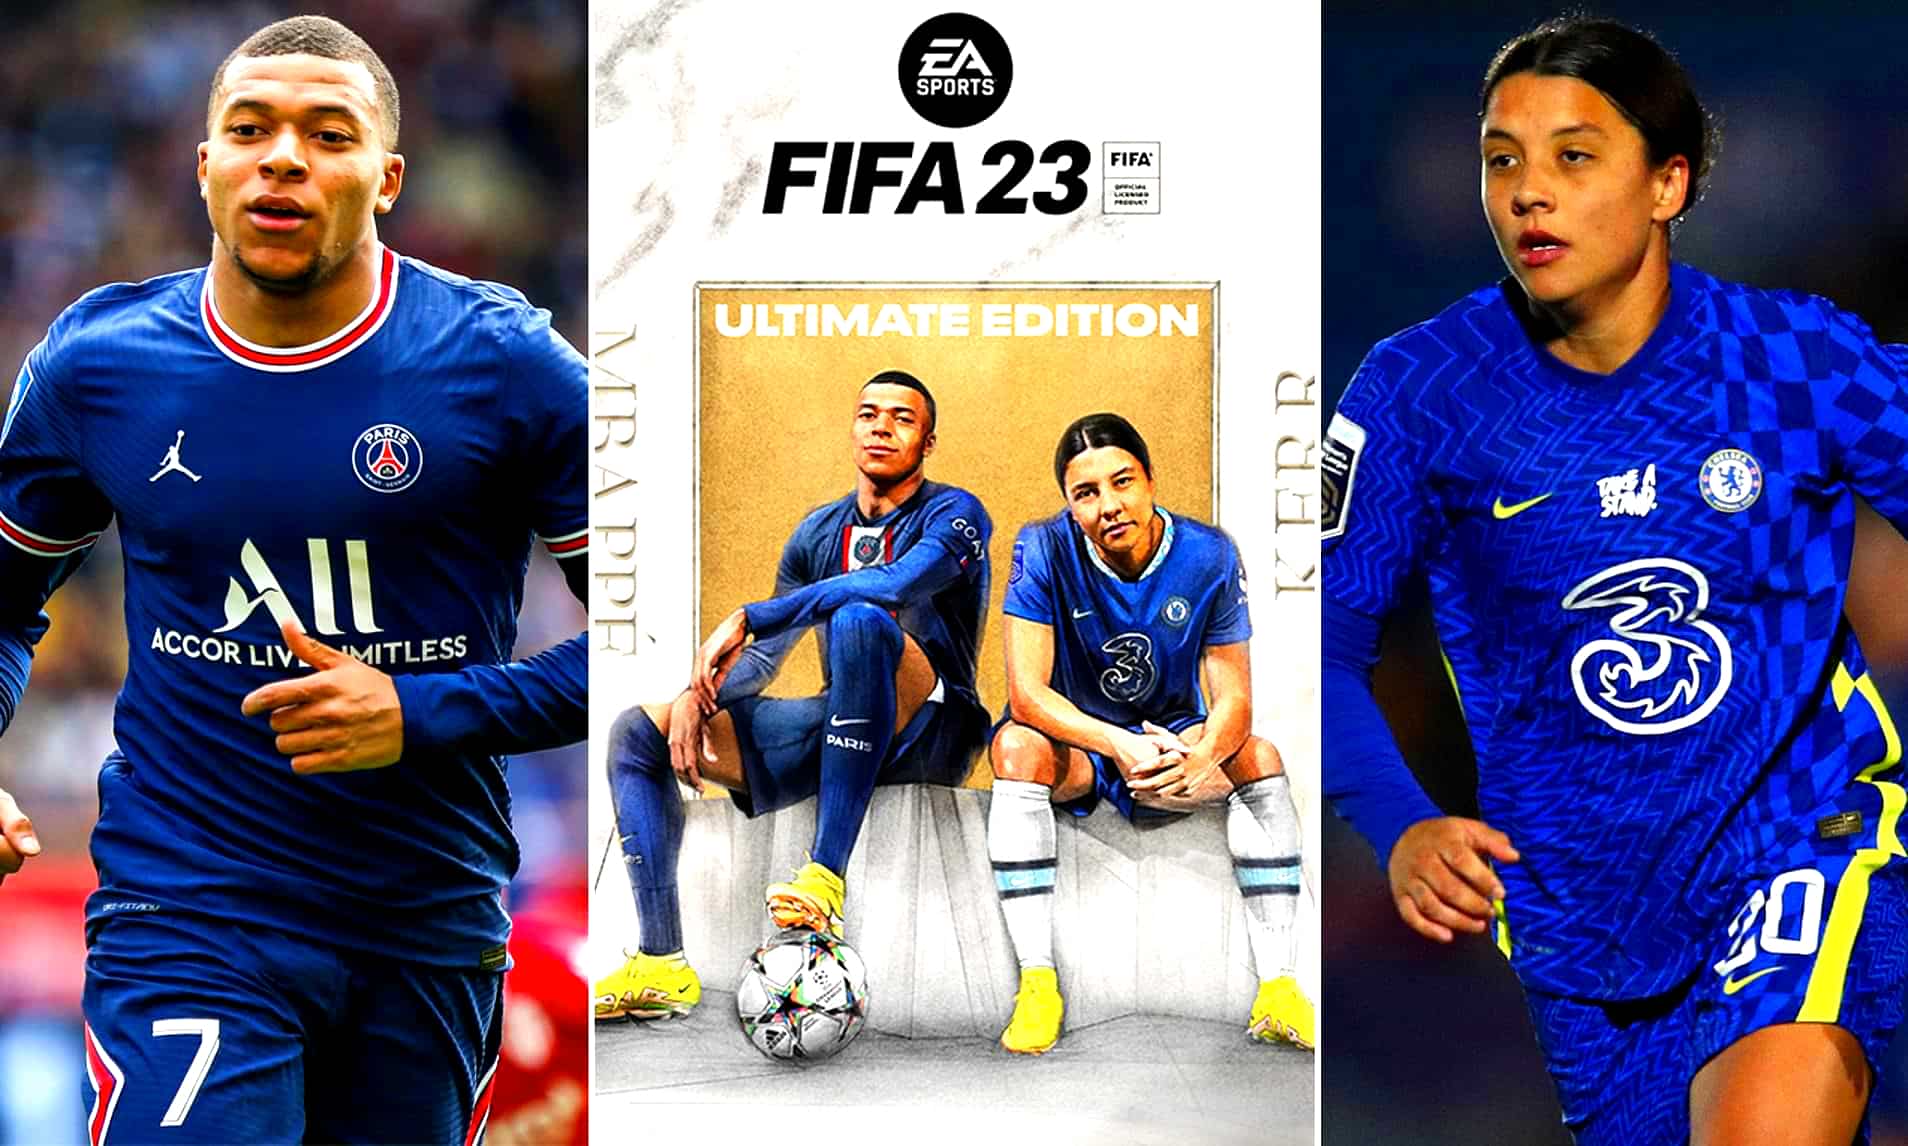 FIFA 23 crossplay